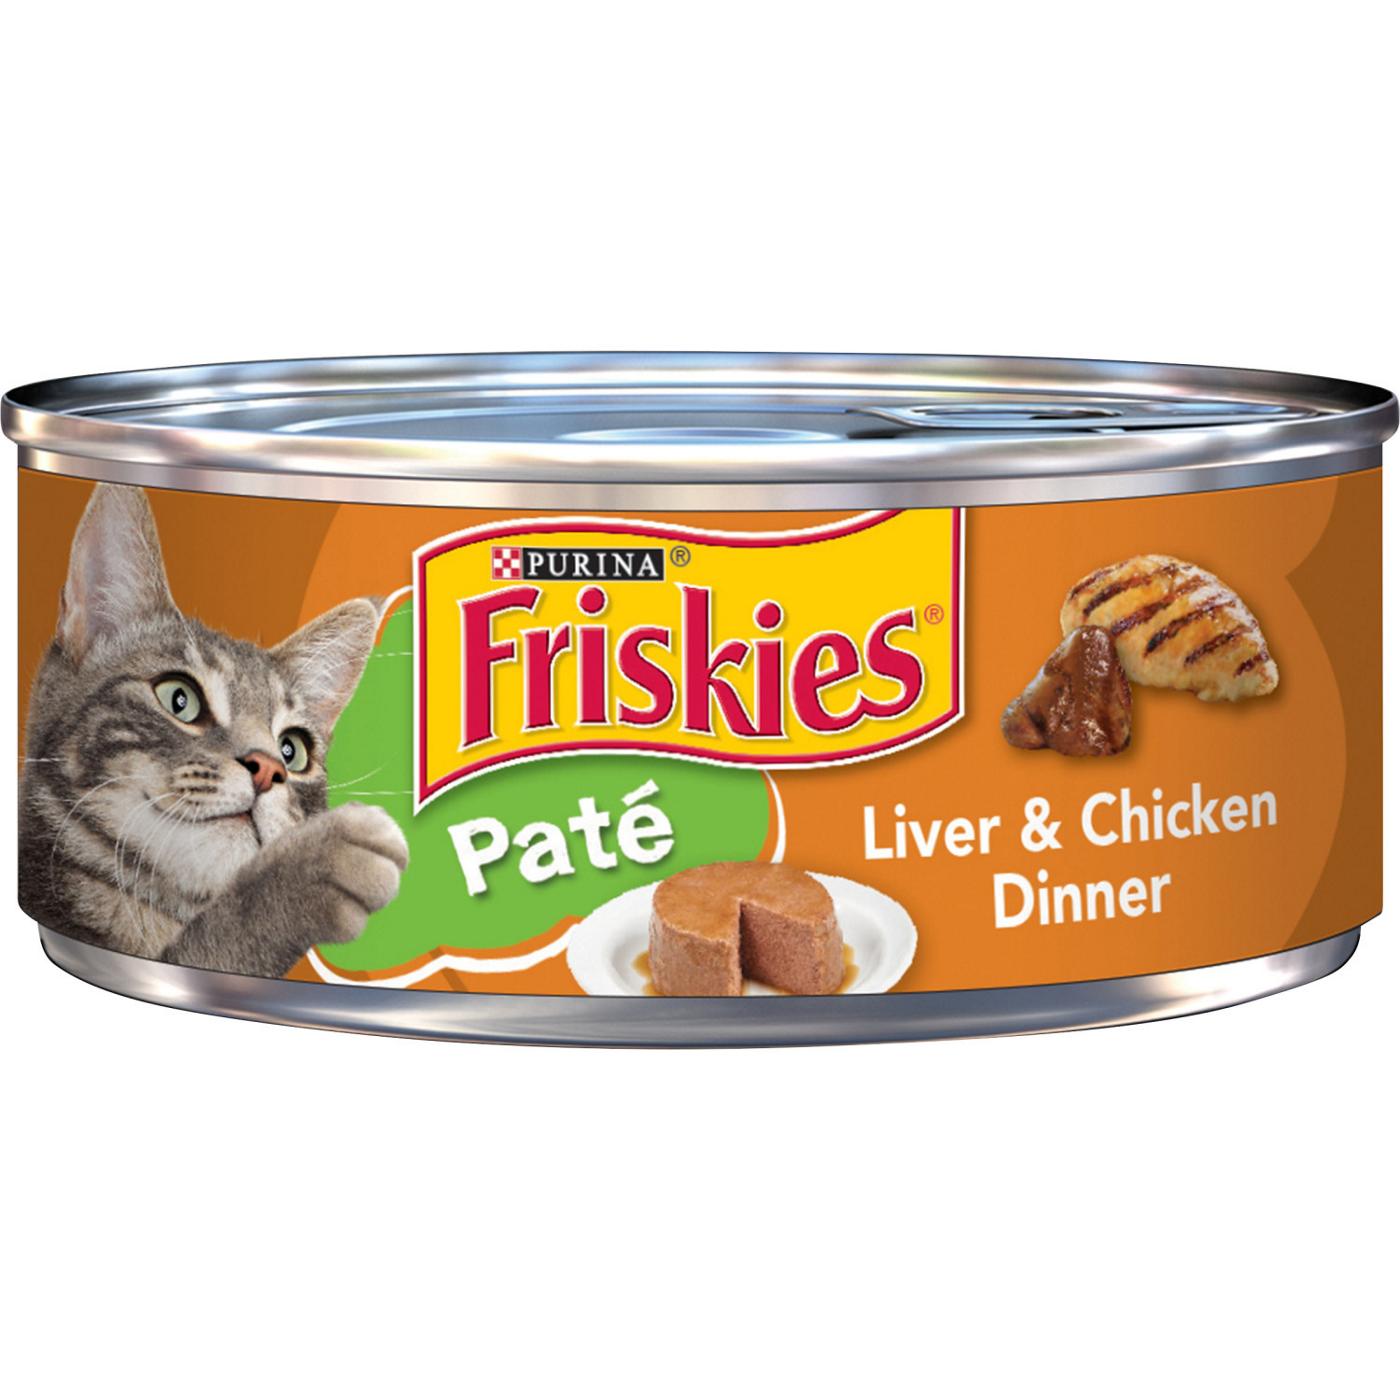 Friskies Purina Friskies Pate Wet Cat Food, Liver & Chicken Dinner; image 1 of 3